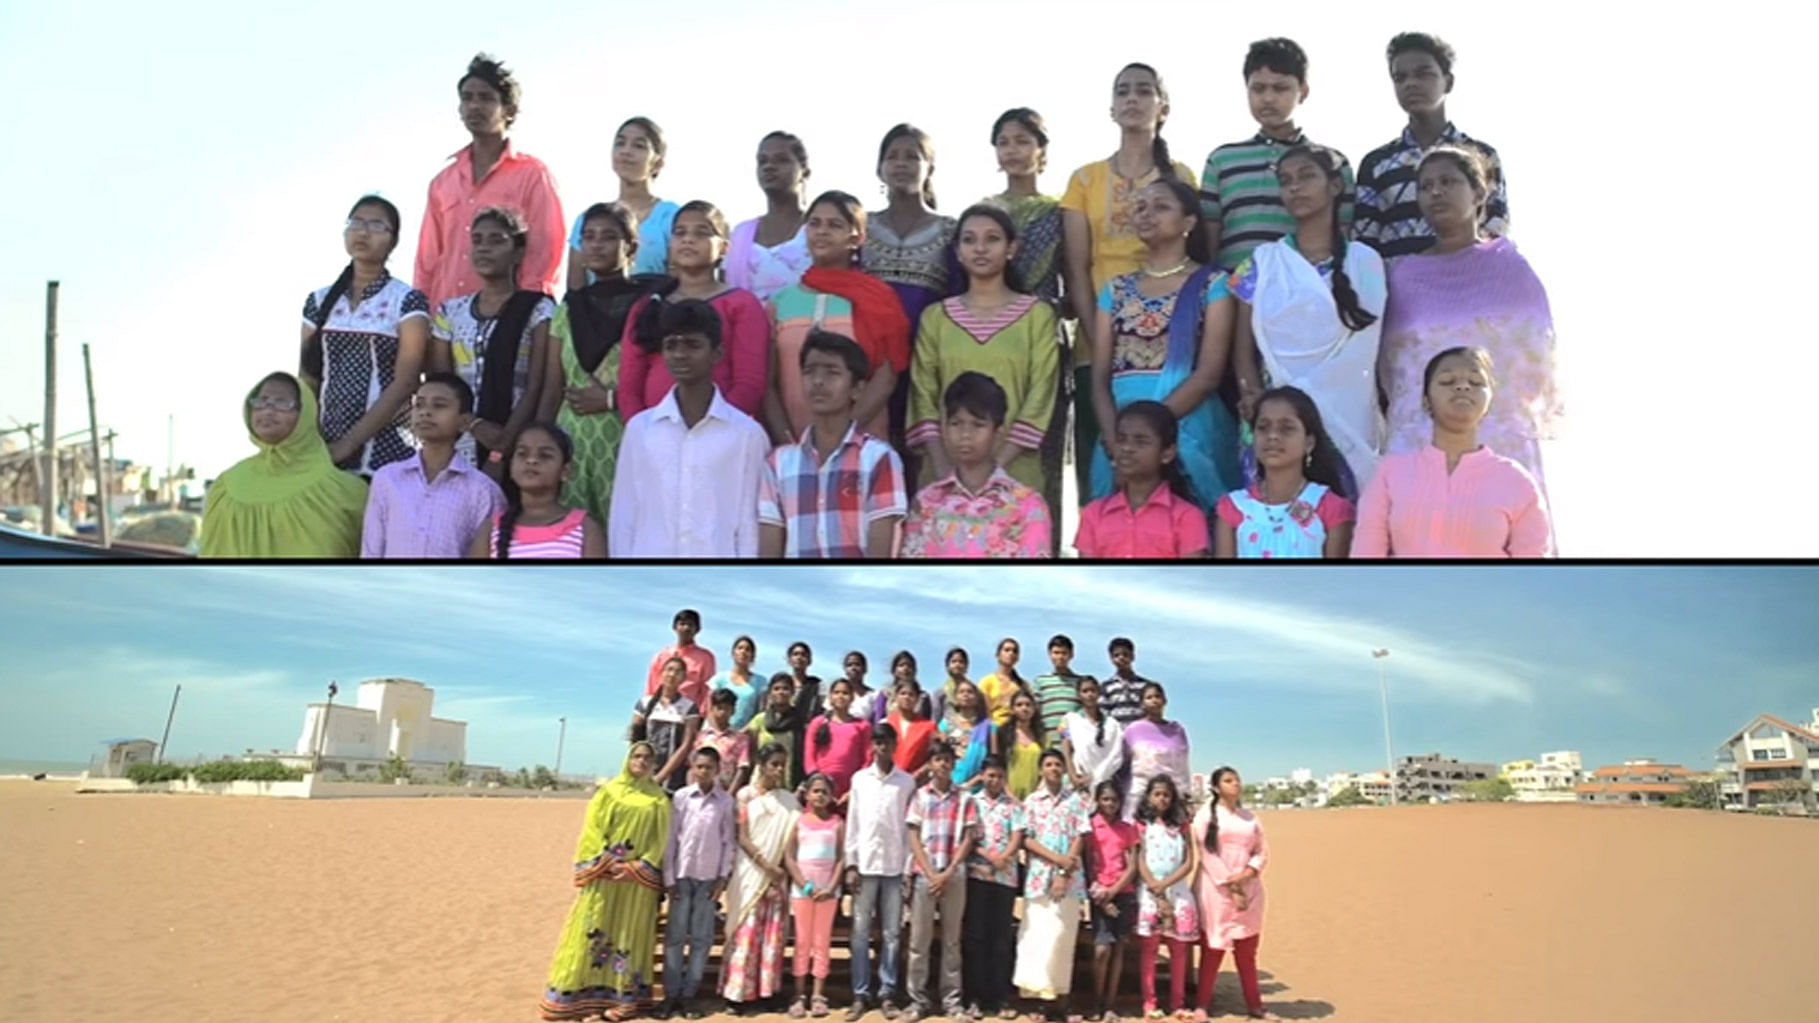 The Chennai Children’s Choir formed by Nalandaway Foundation. (Photo: YouTube Screenshot)